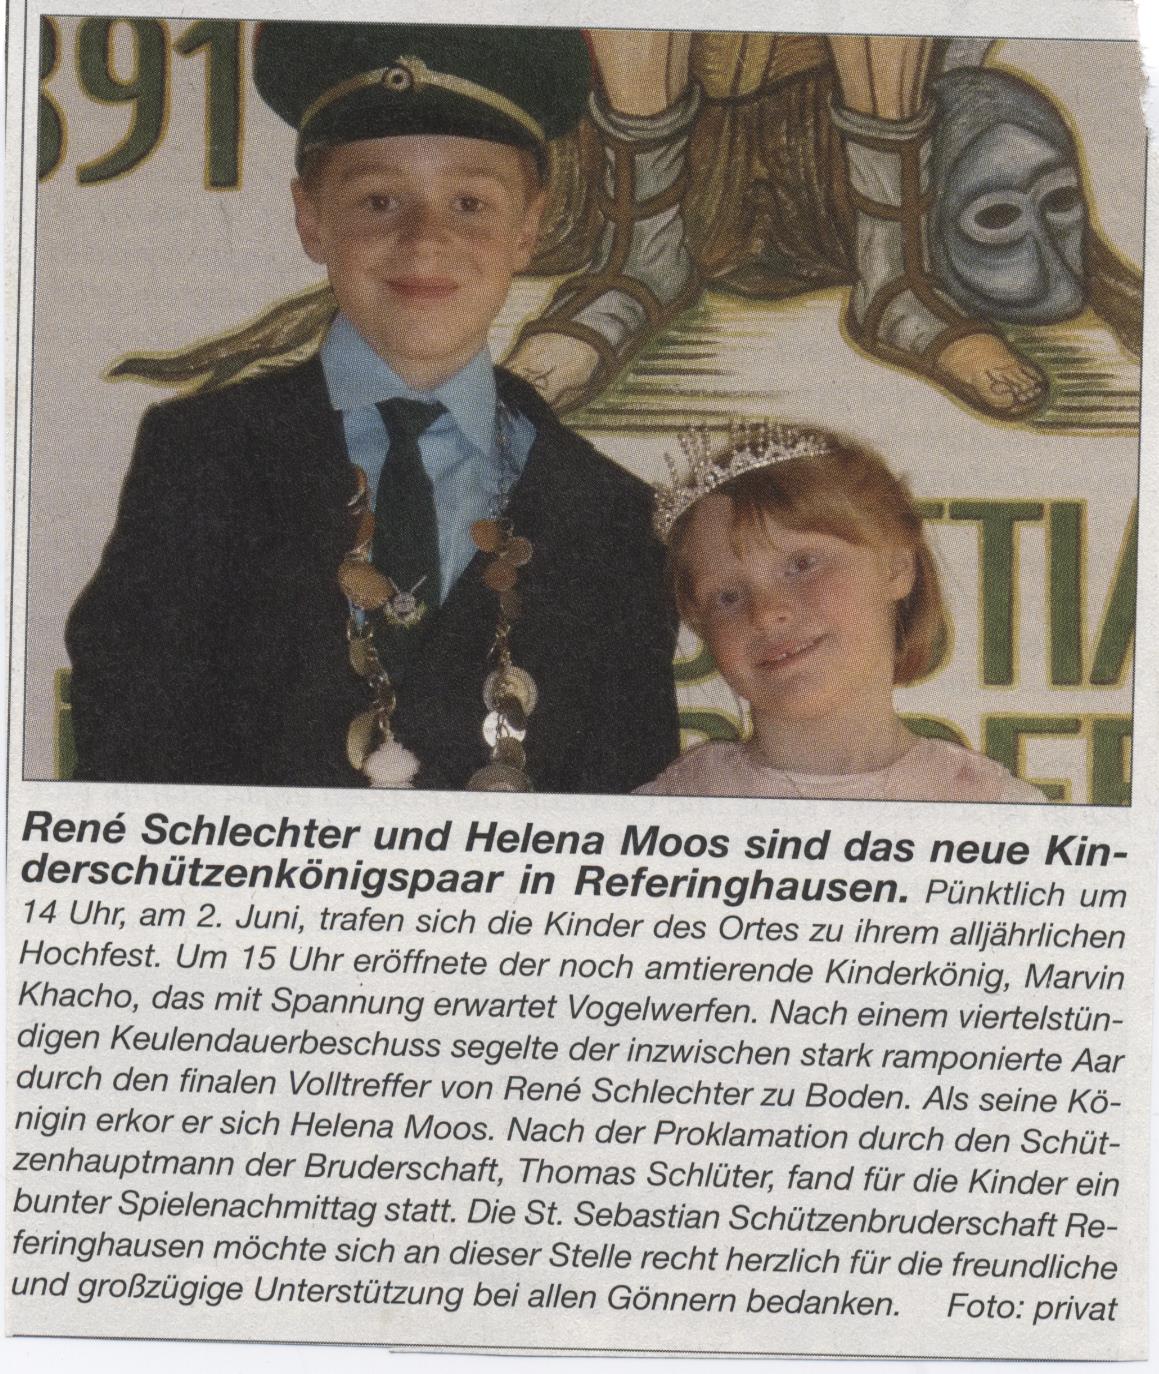 Kinderschützenkönigspaar René und Helena